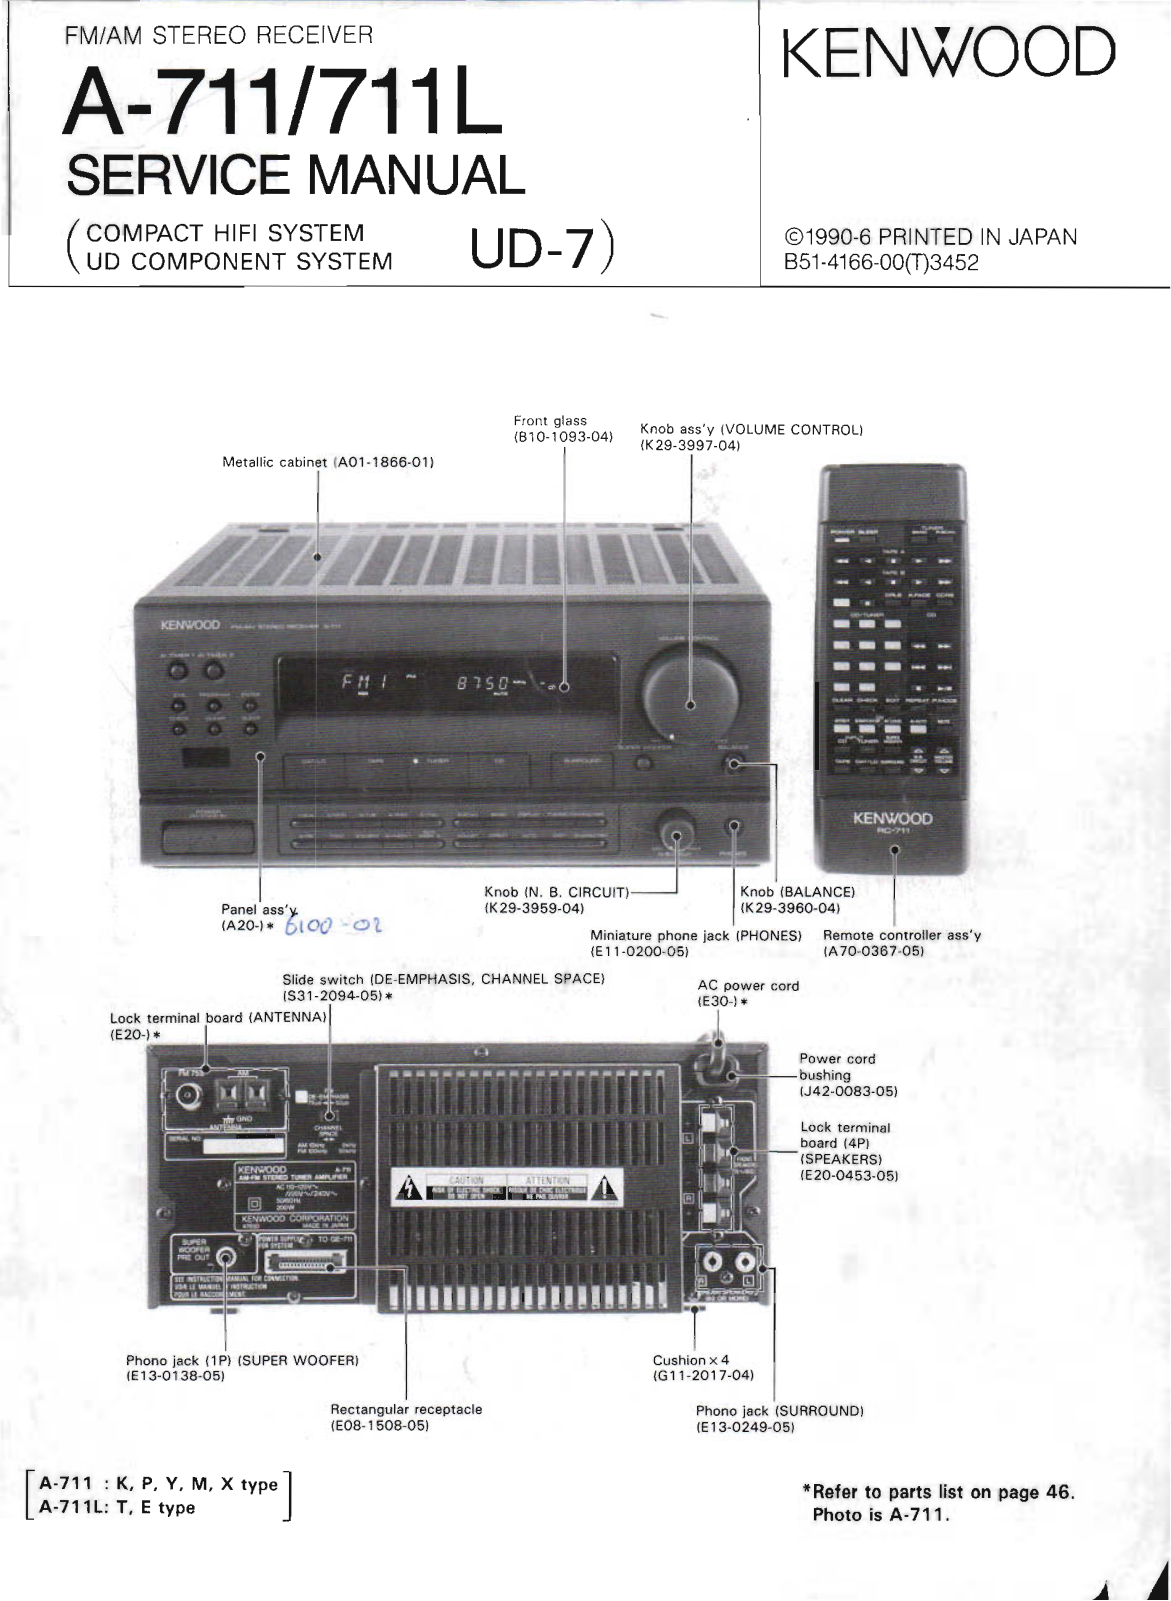 Kenwood A-711-L Service Manual